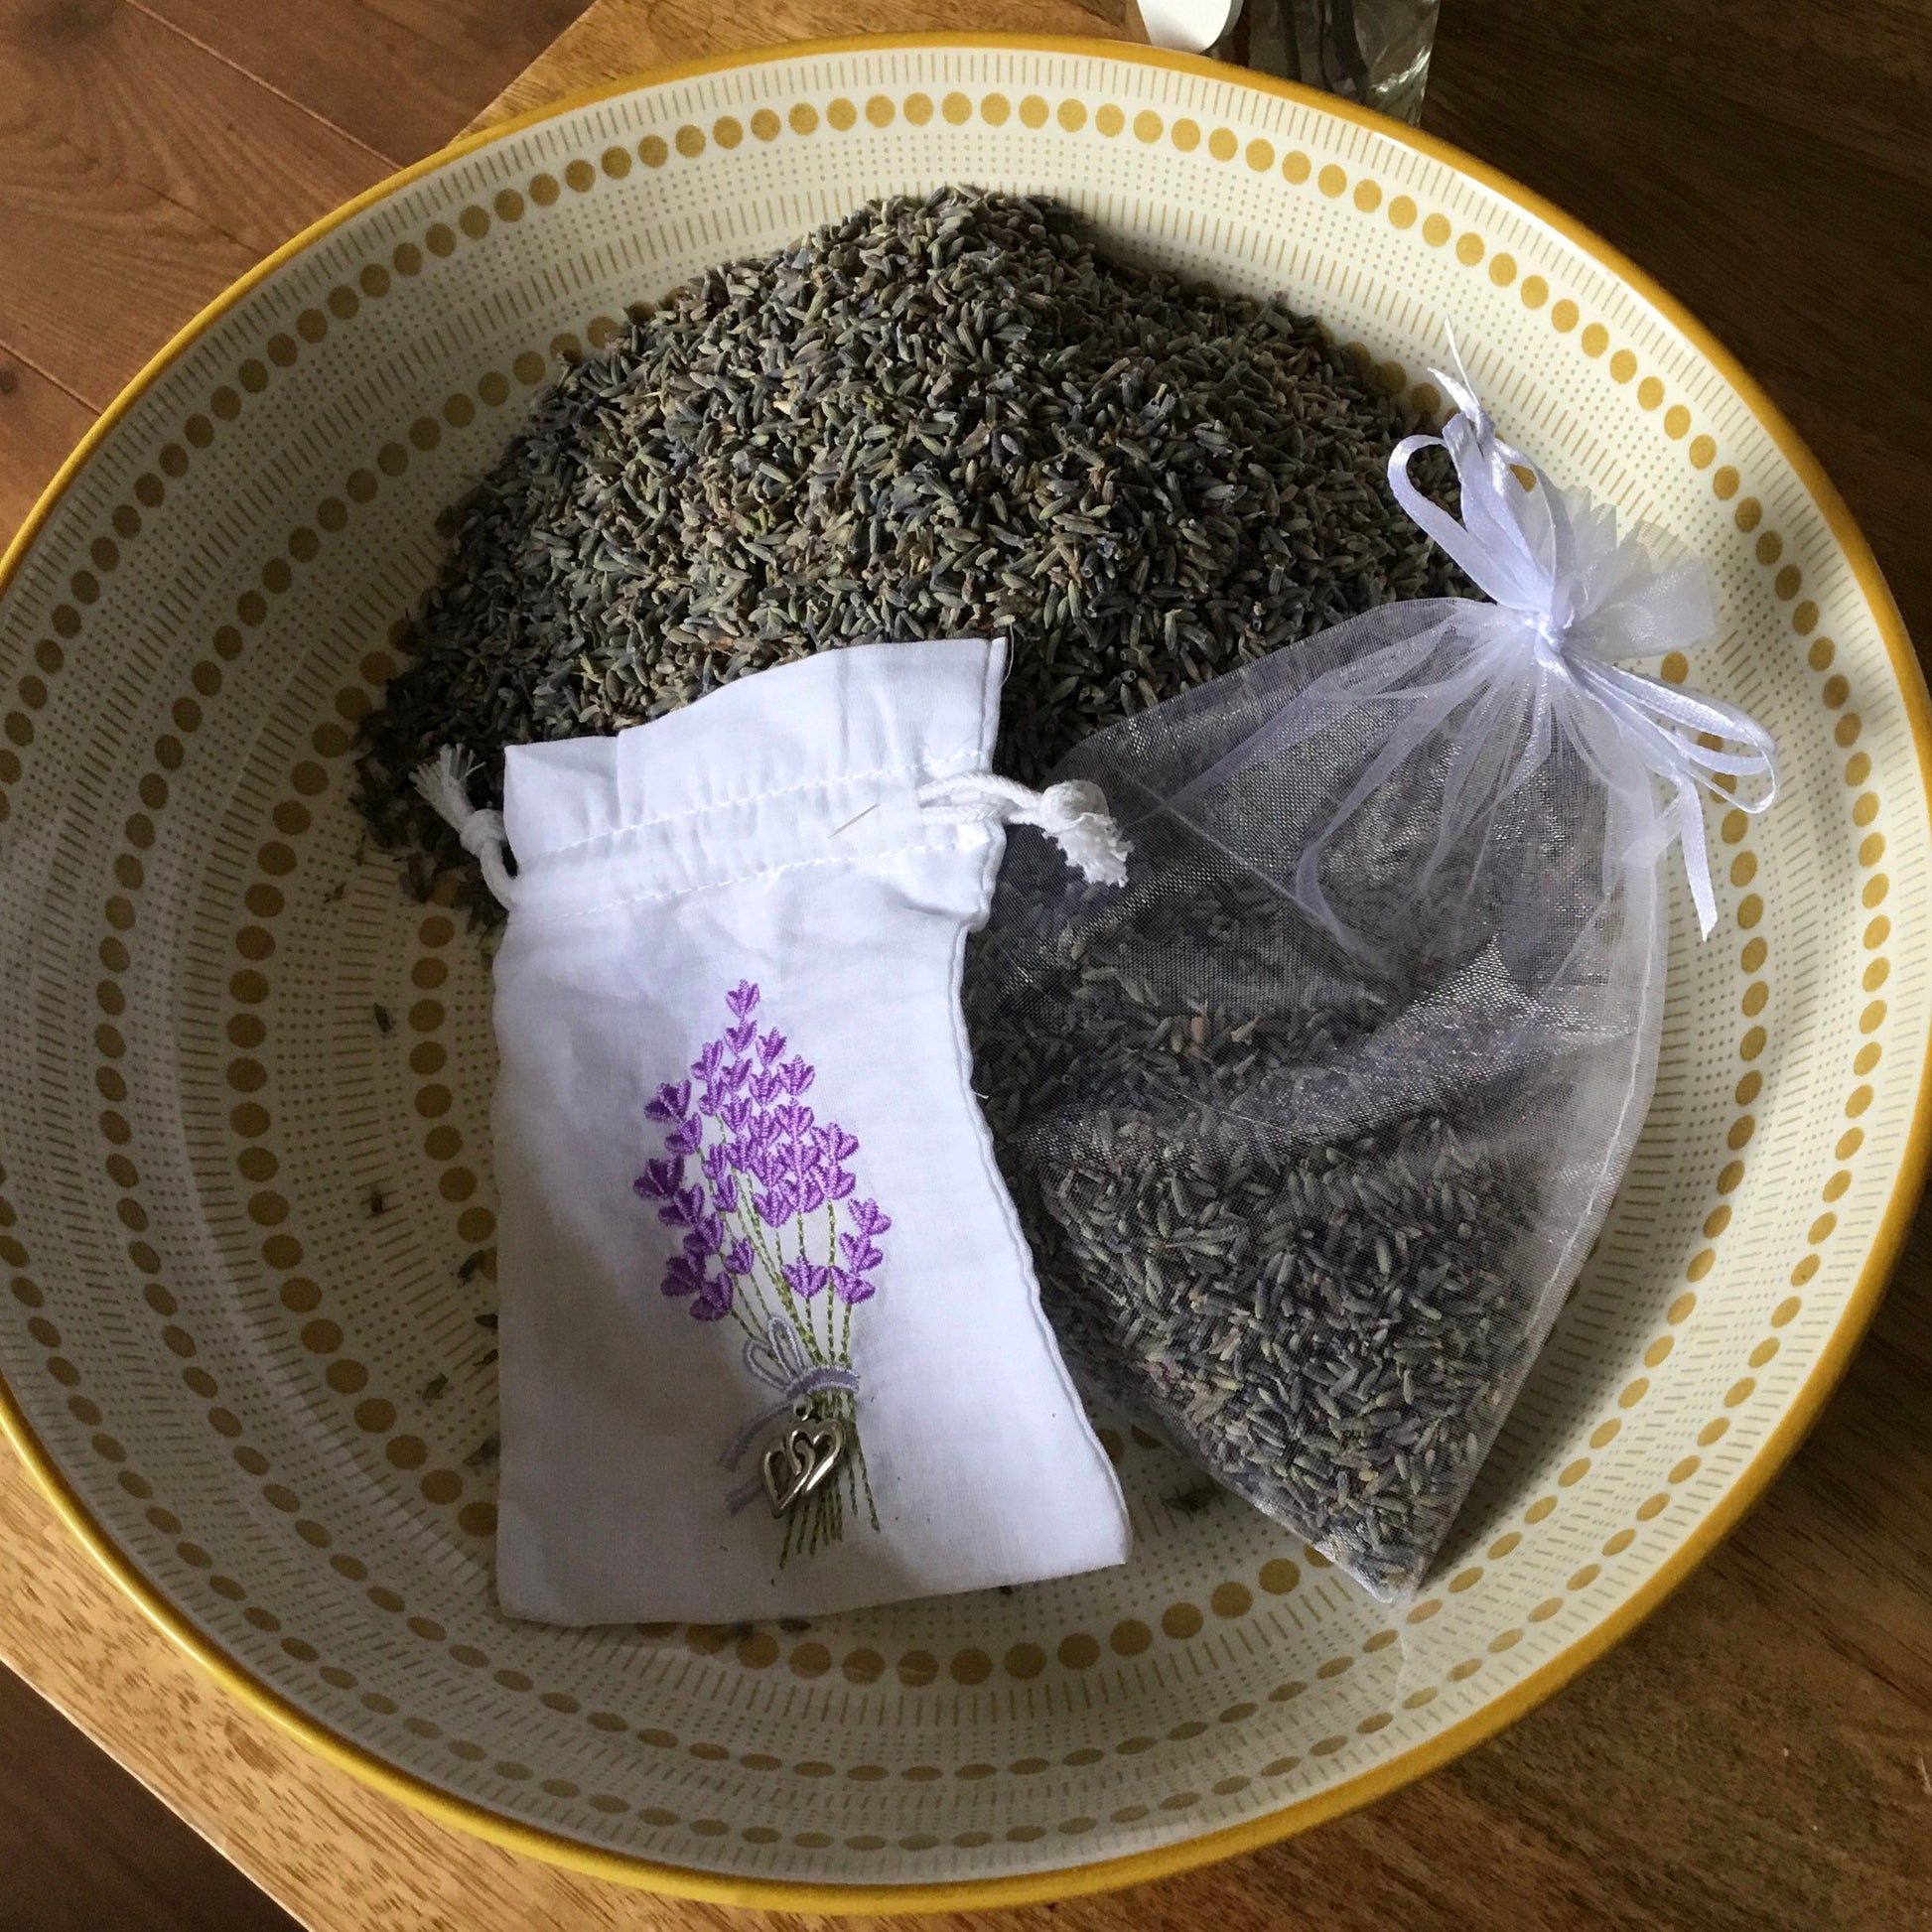 Dried lavender ingredient for embroidered Lavender bag.